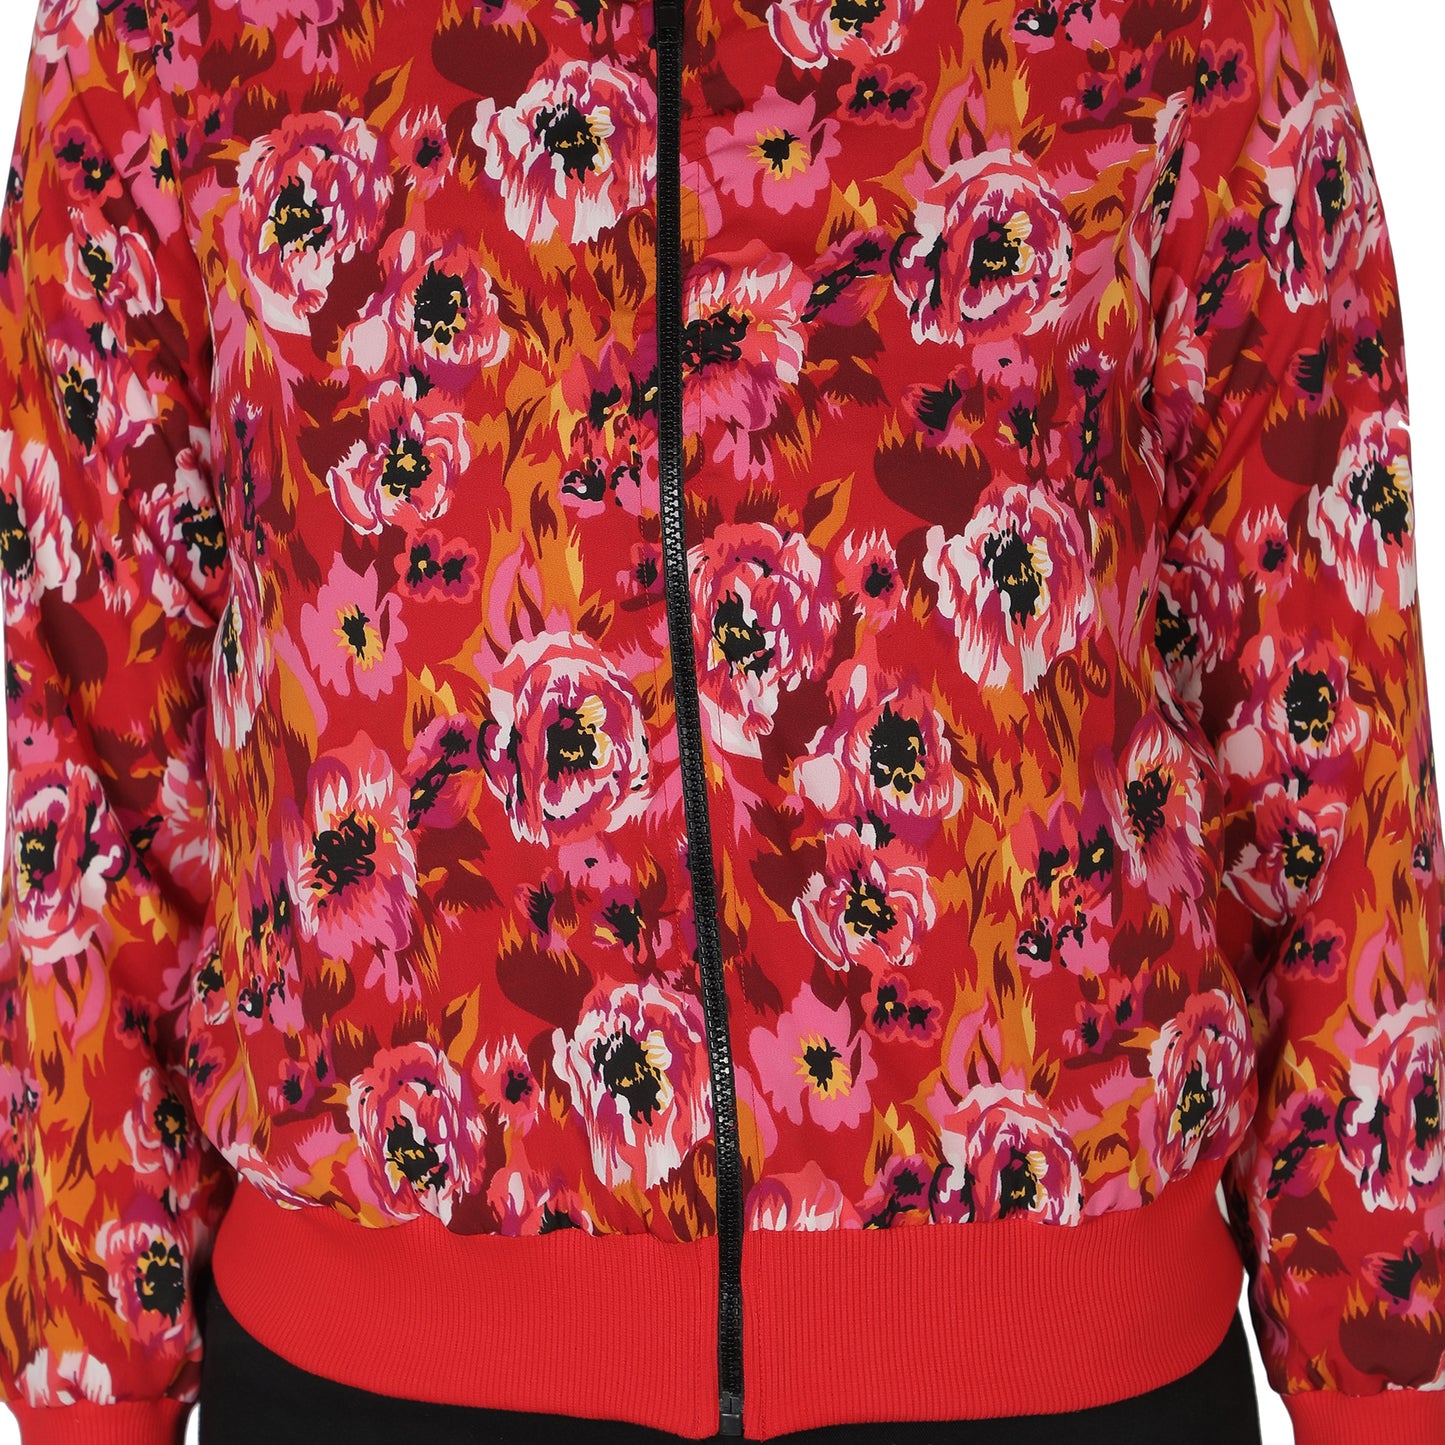 NUEVOSDAMAS Women Full sleeve Multi Floral Printed Bomber Jacket